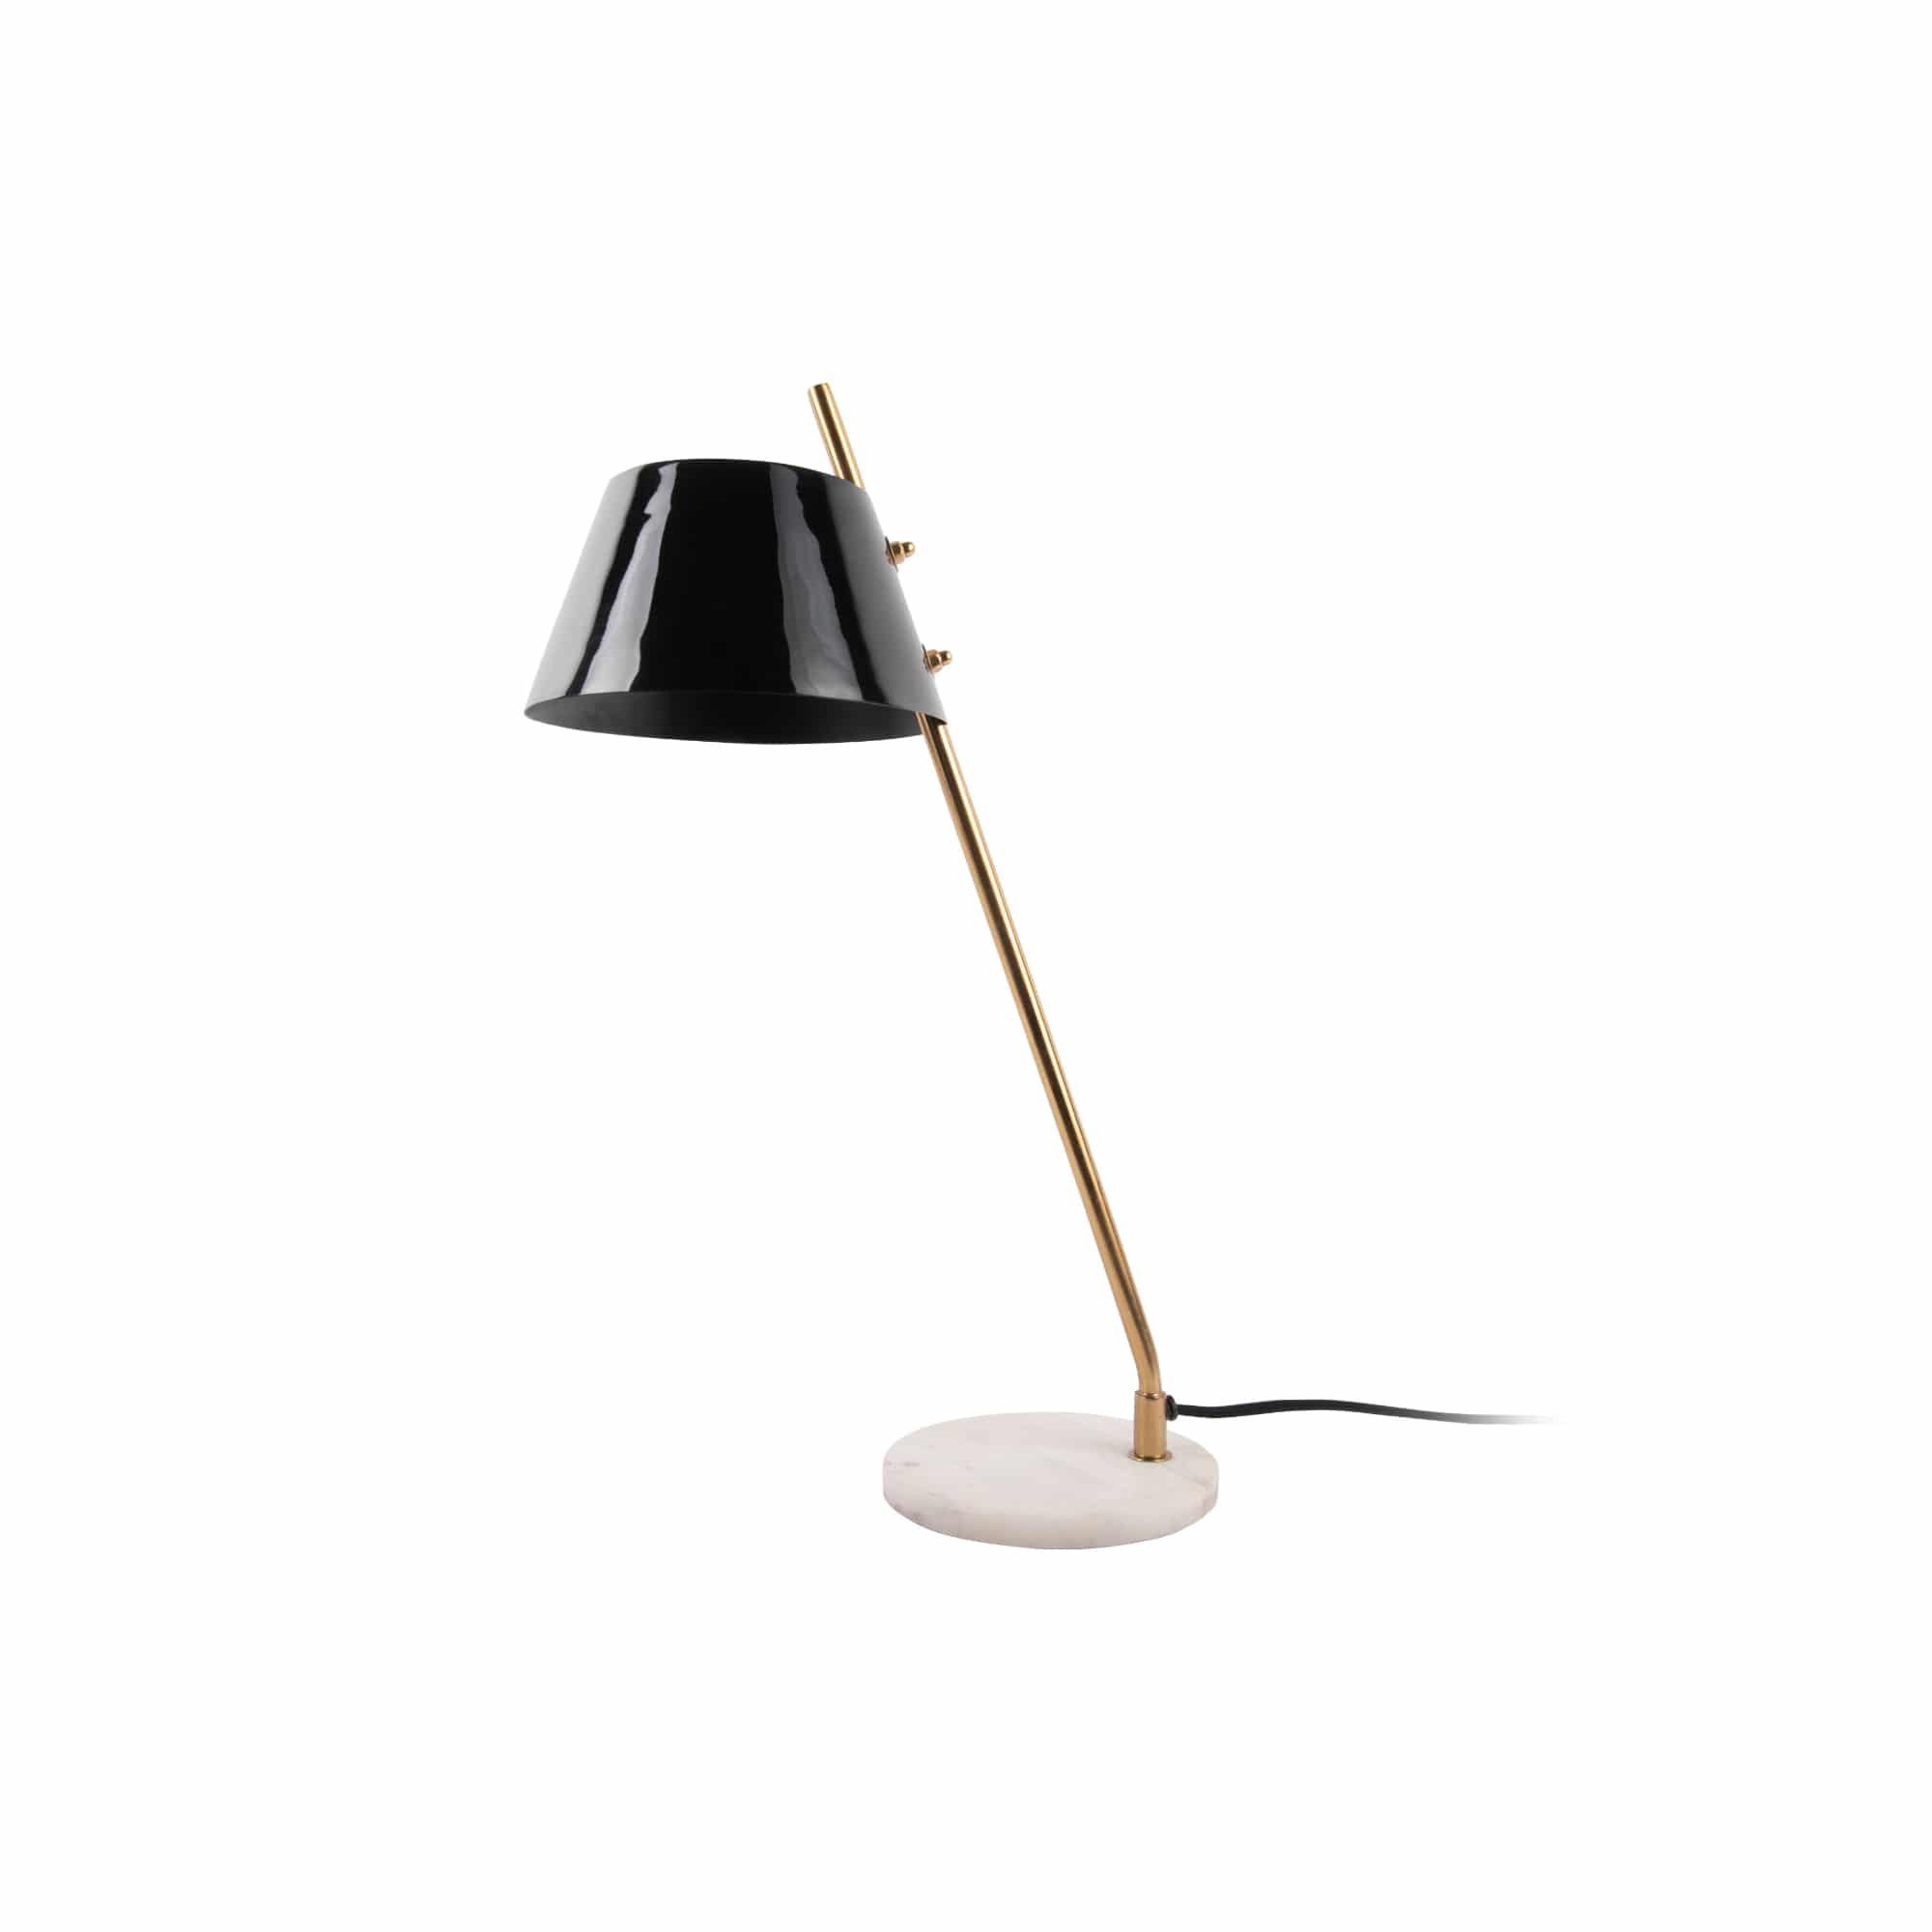 Tafellamp Savvy - Zwart - 19x33x53cm